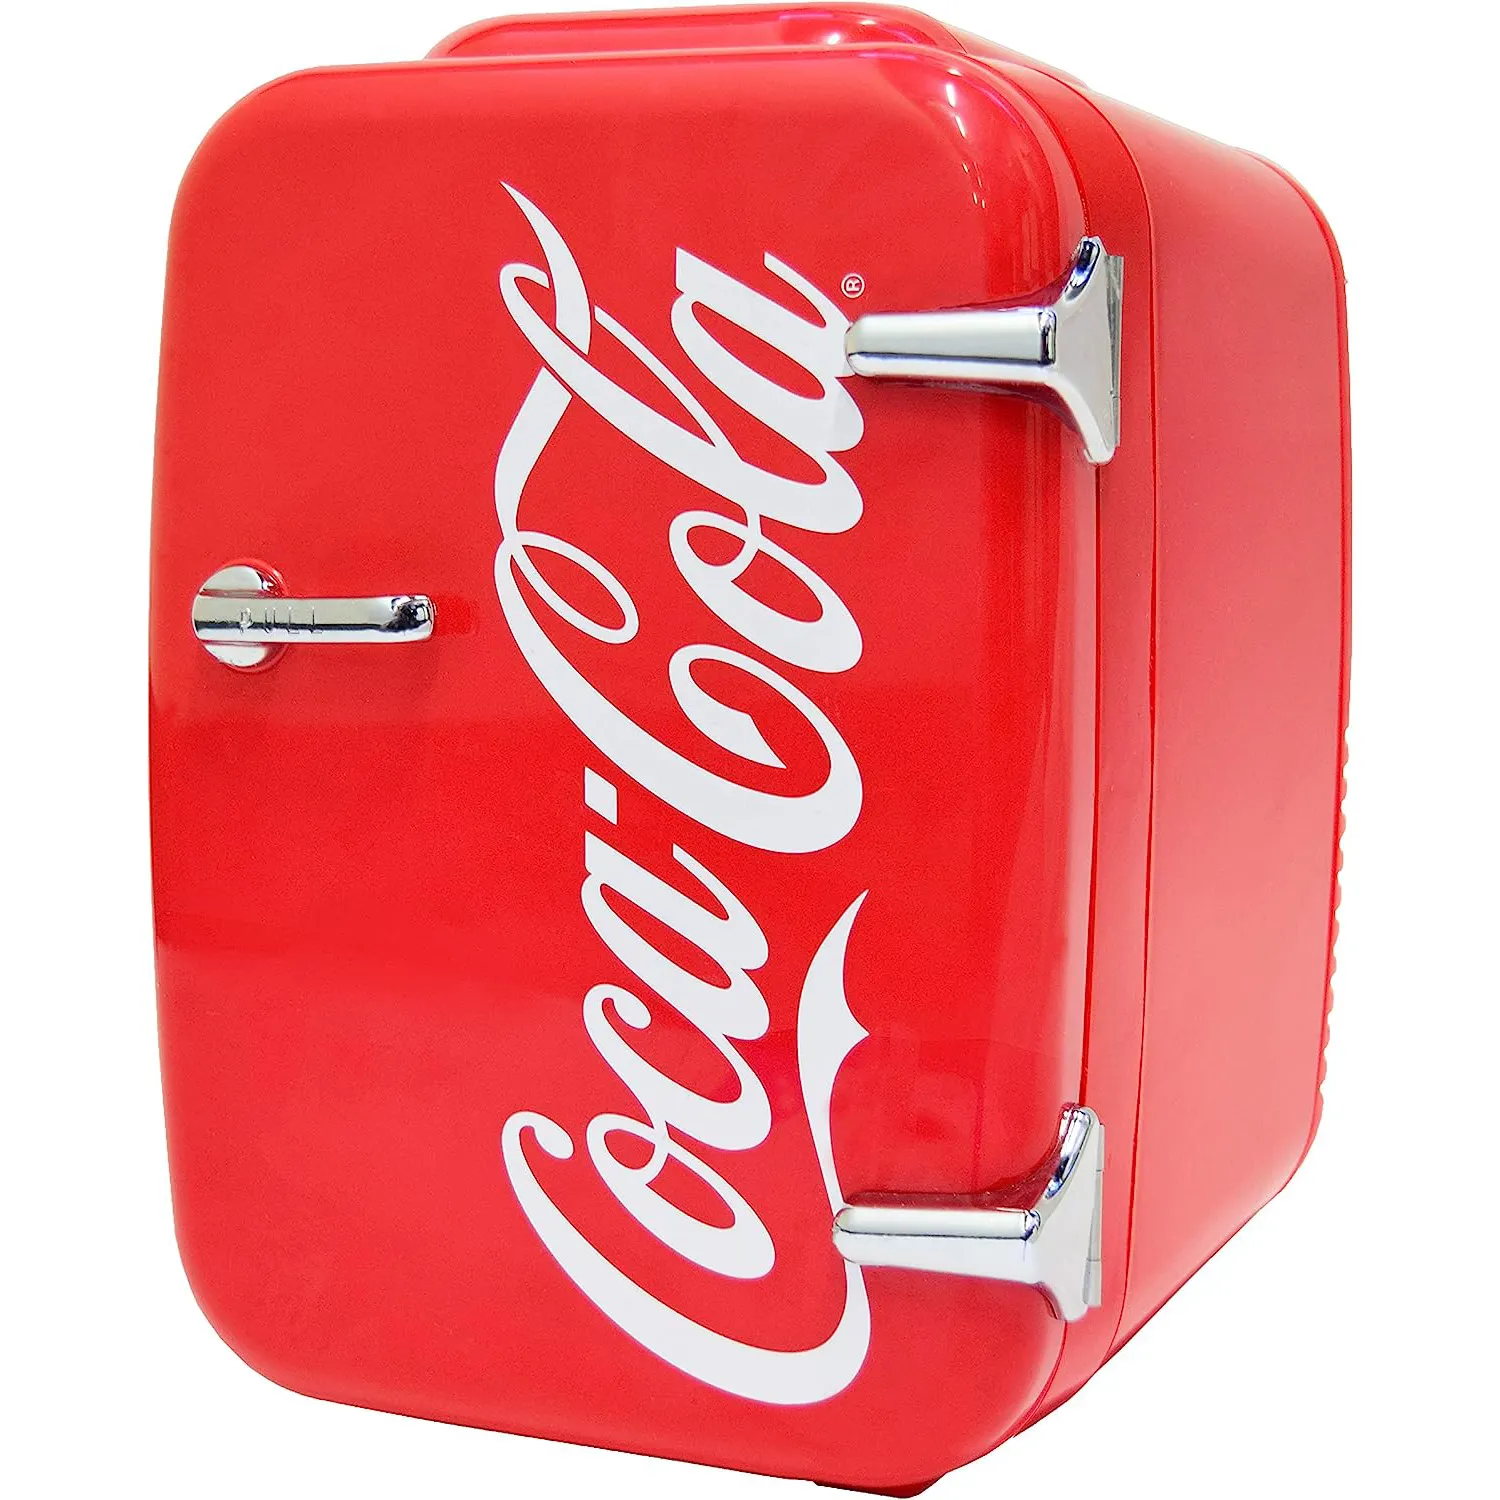 Mini Fridge 4 Liter Electric Cooler And Warmer AC / DC Portable Fridge small fridge portable refrigerator